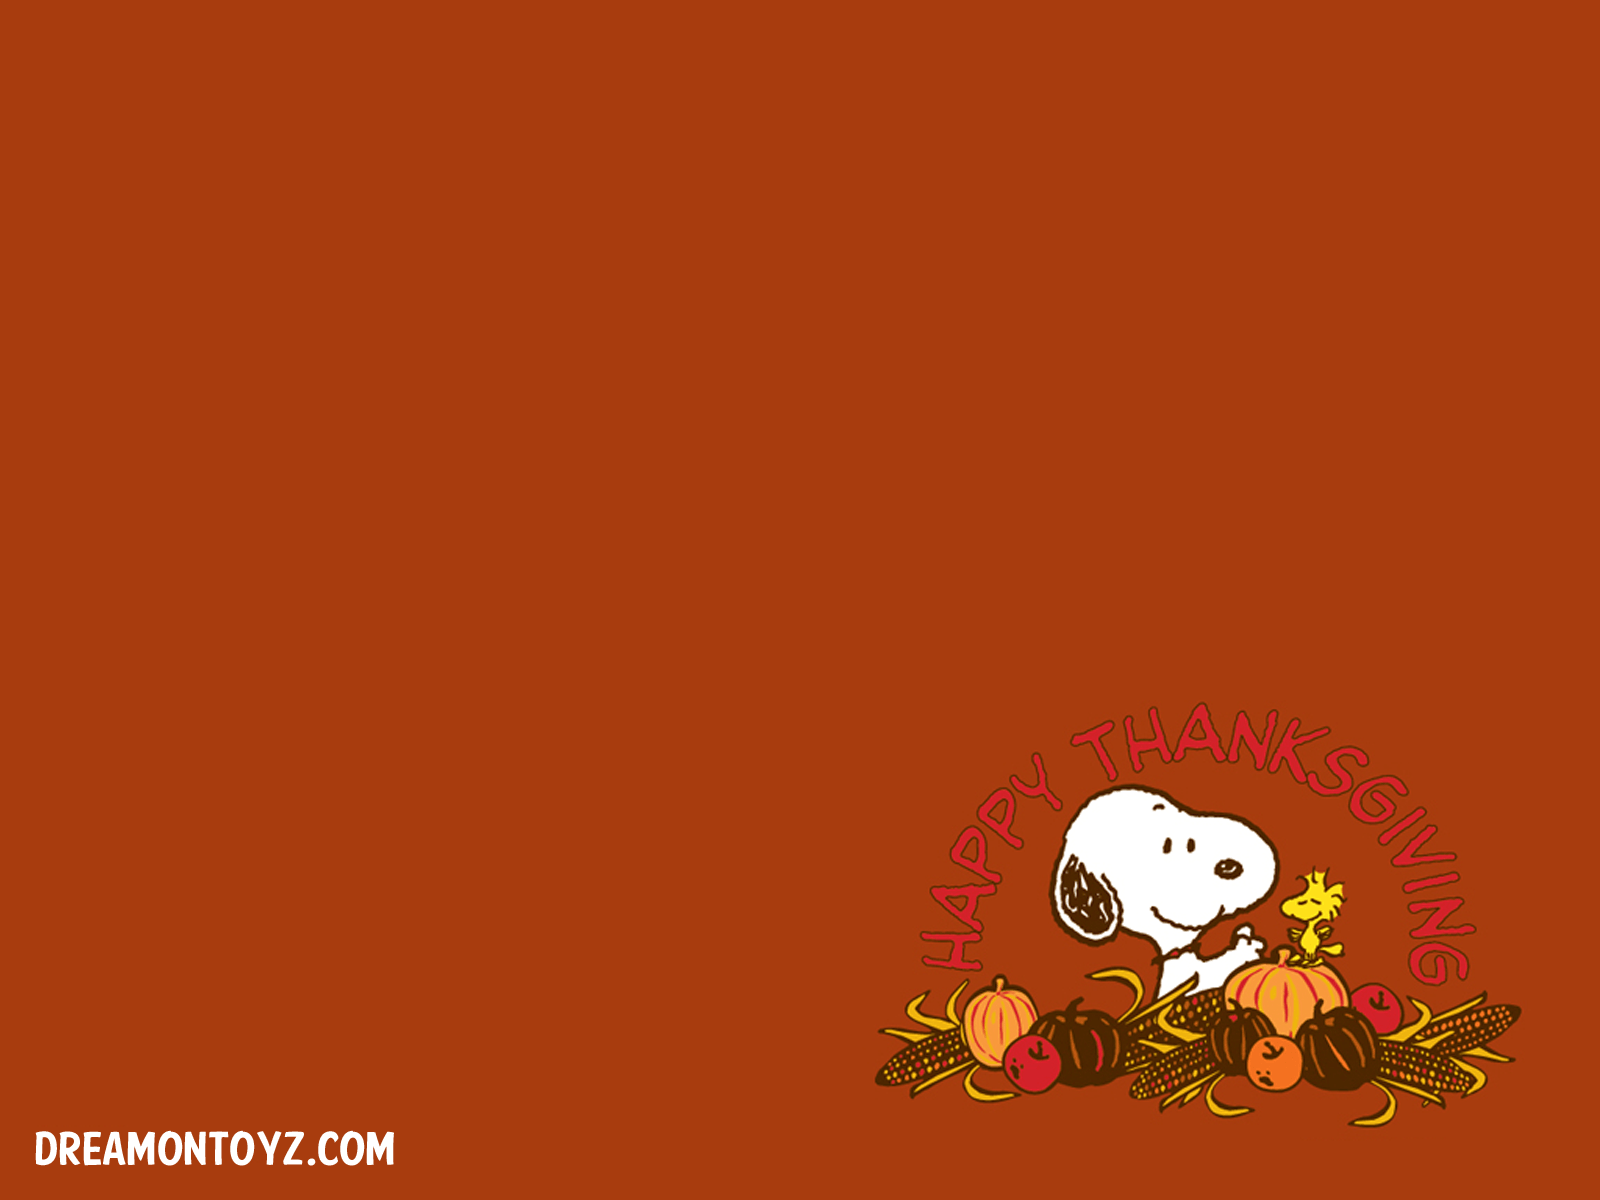 FREE Cartoon Graphics / Pics / Gifs / Photographs: Peanuts Snoopy Thanksgiving wallpaper. Snoopy wallpaper, Thanksgiving wallpaper, Disney thanksgiving